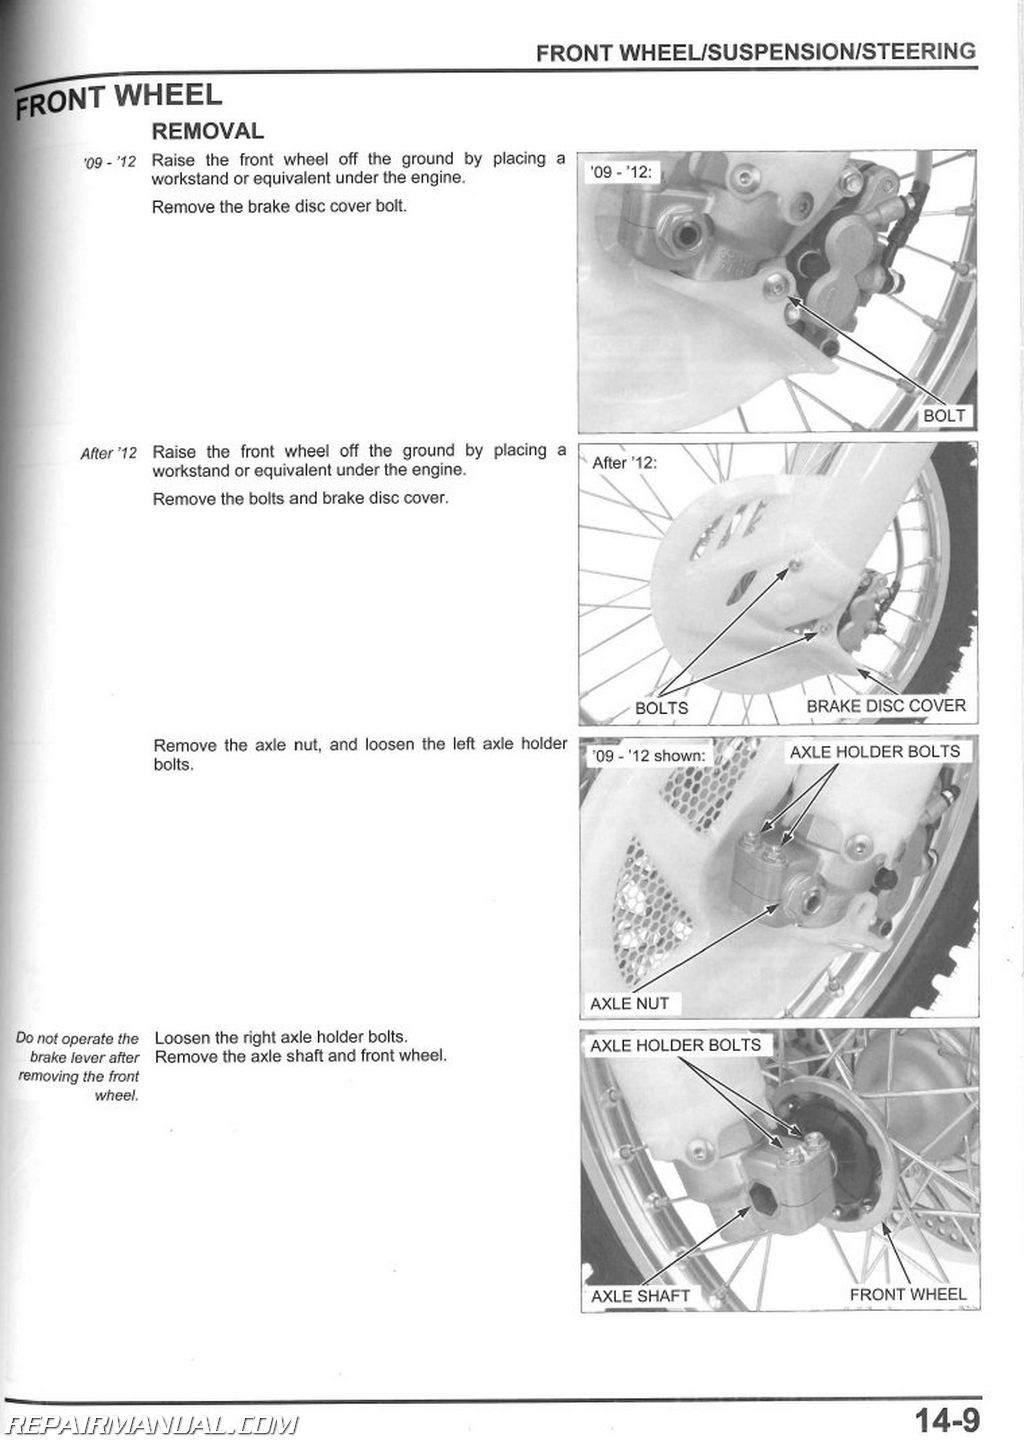 2006 honda crf450r service manual pdf